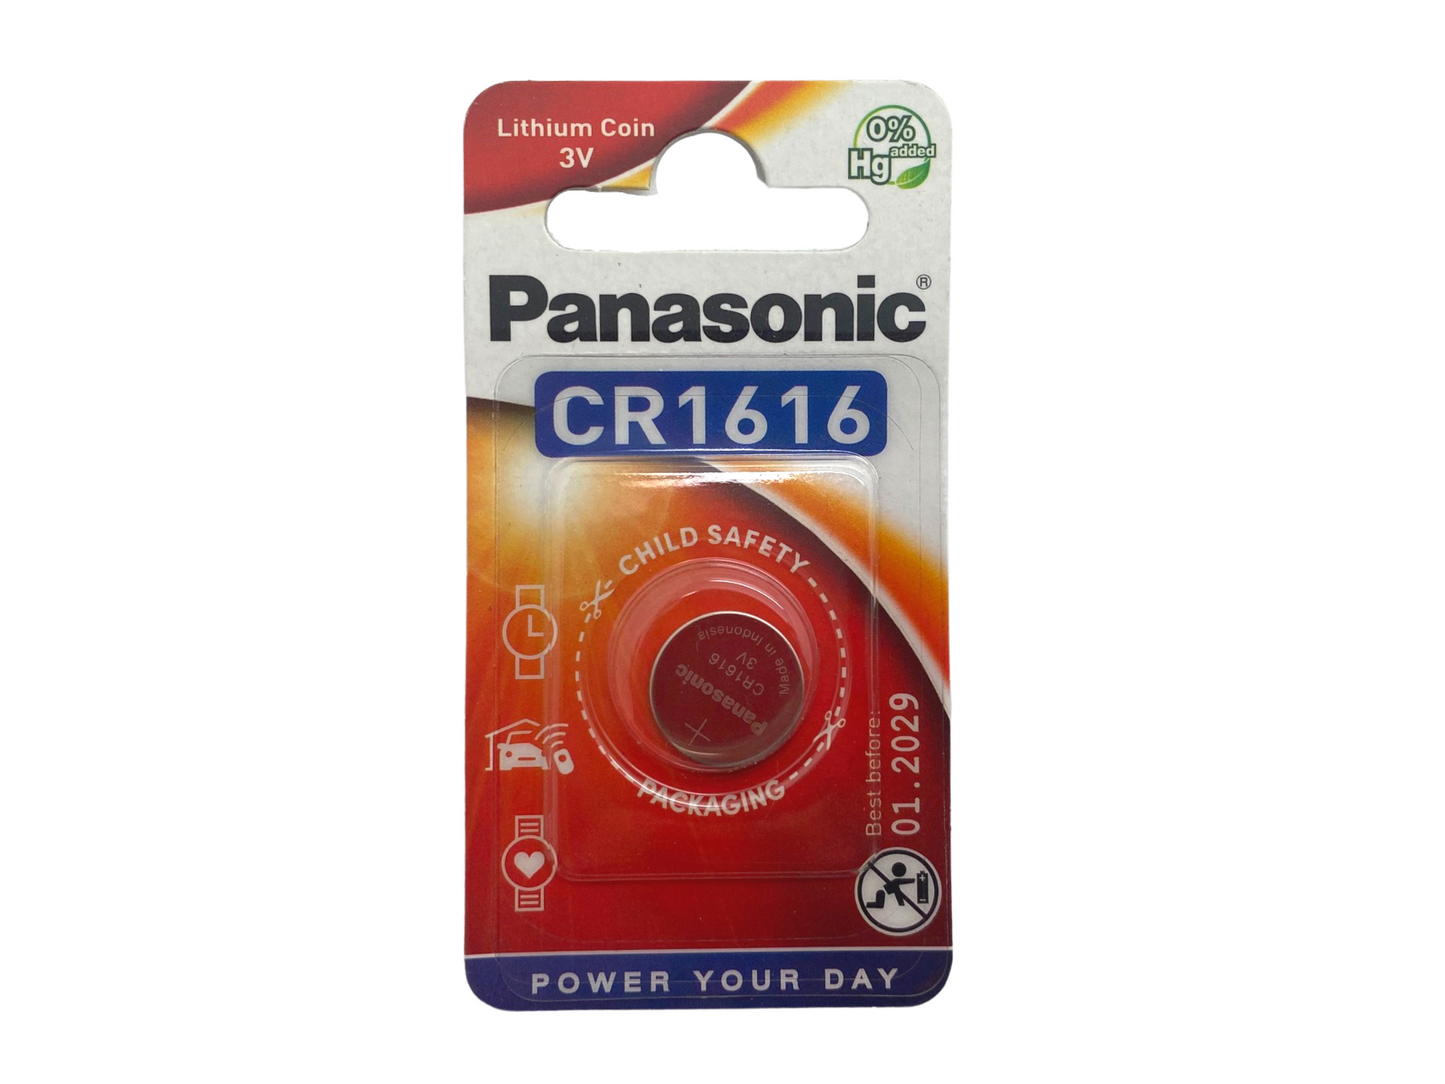 Panasonic CR1616 Lithium Cell Battery